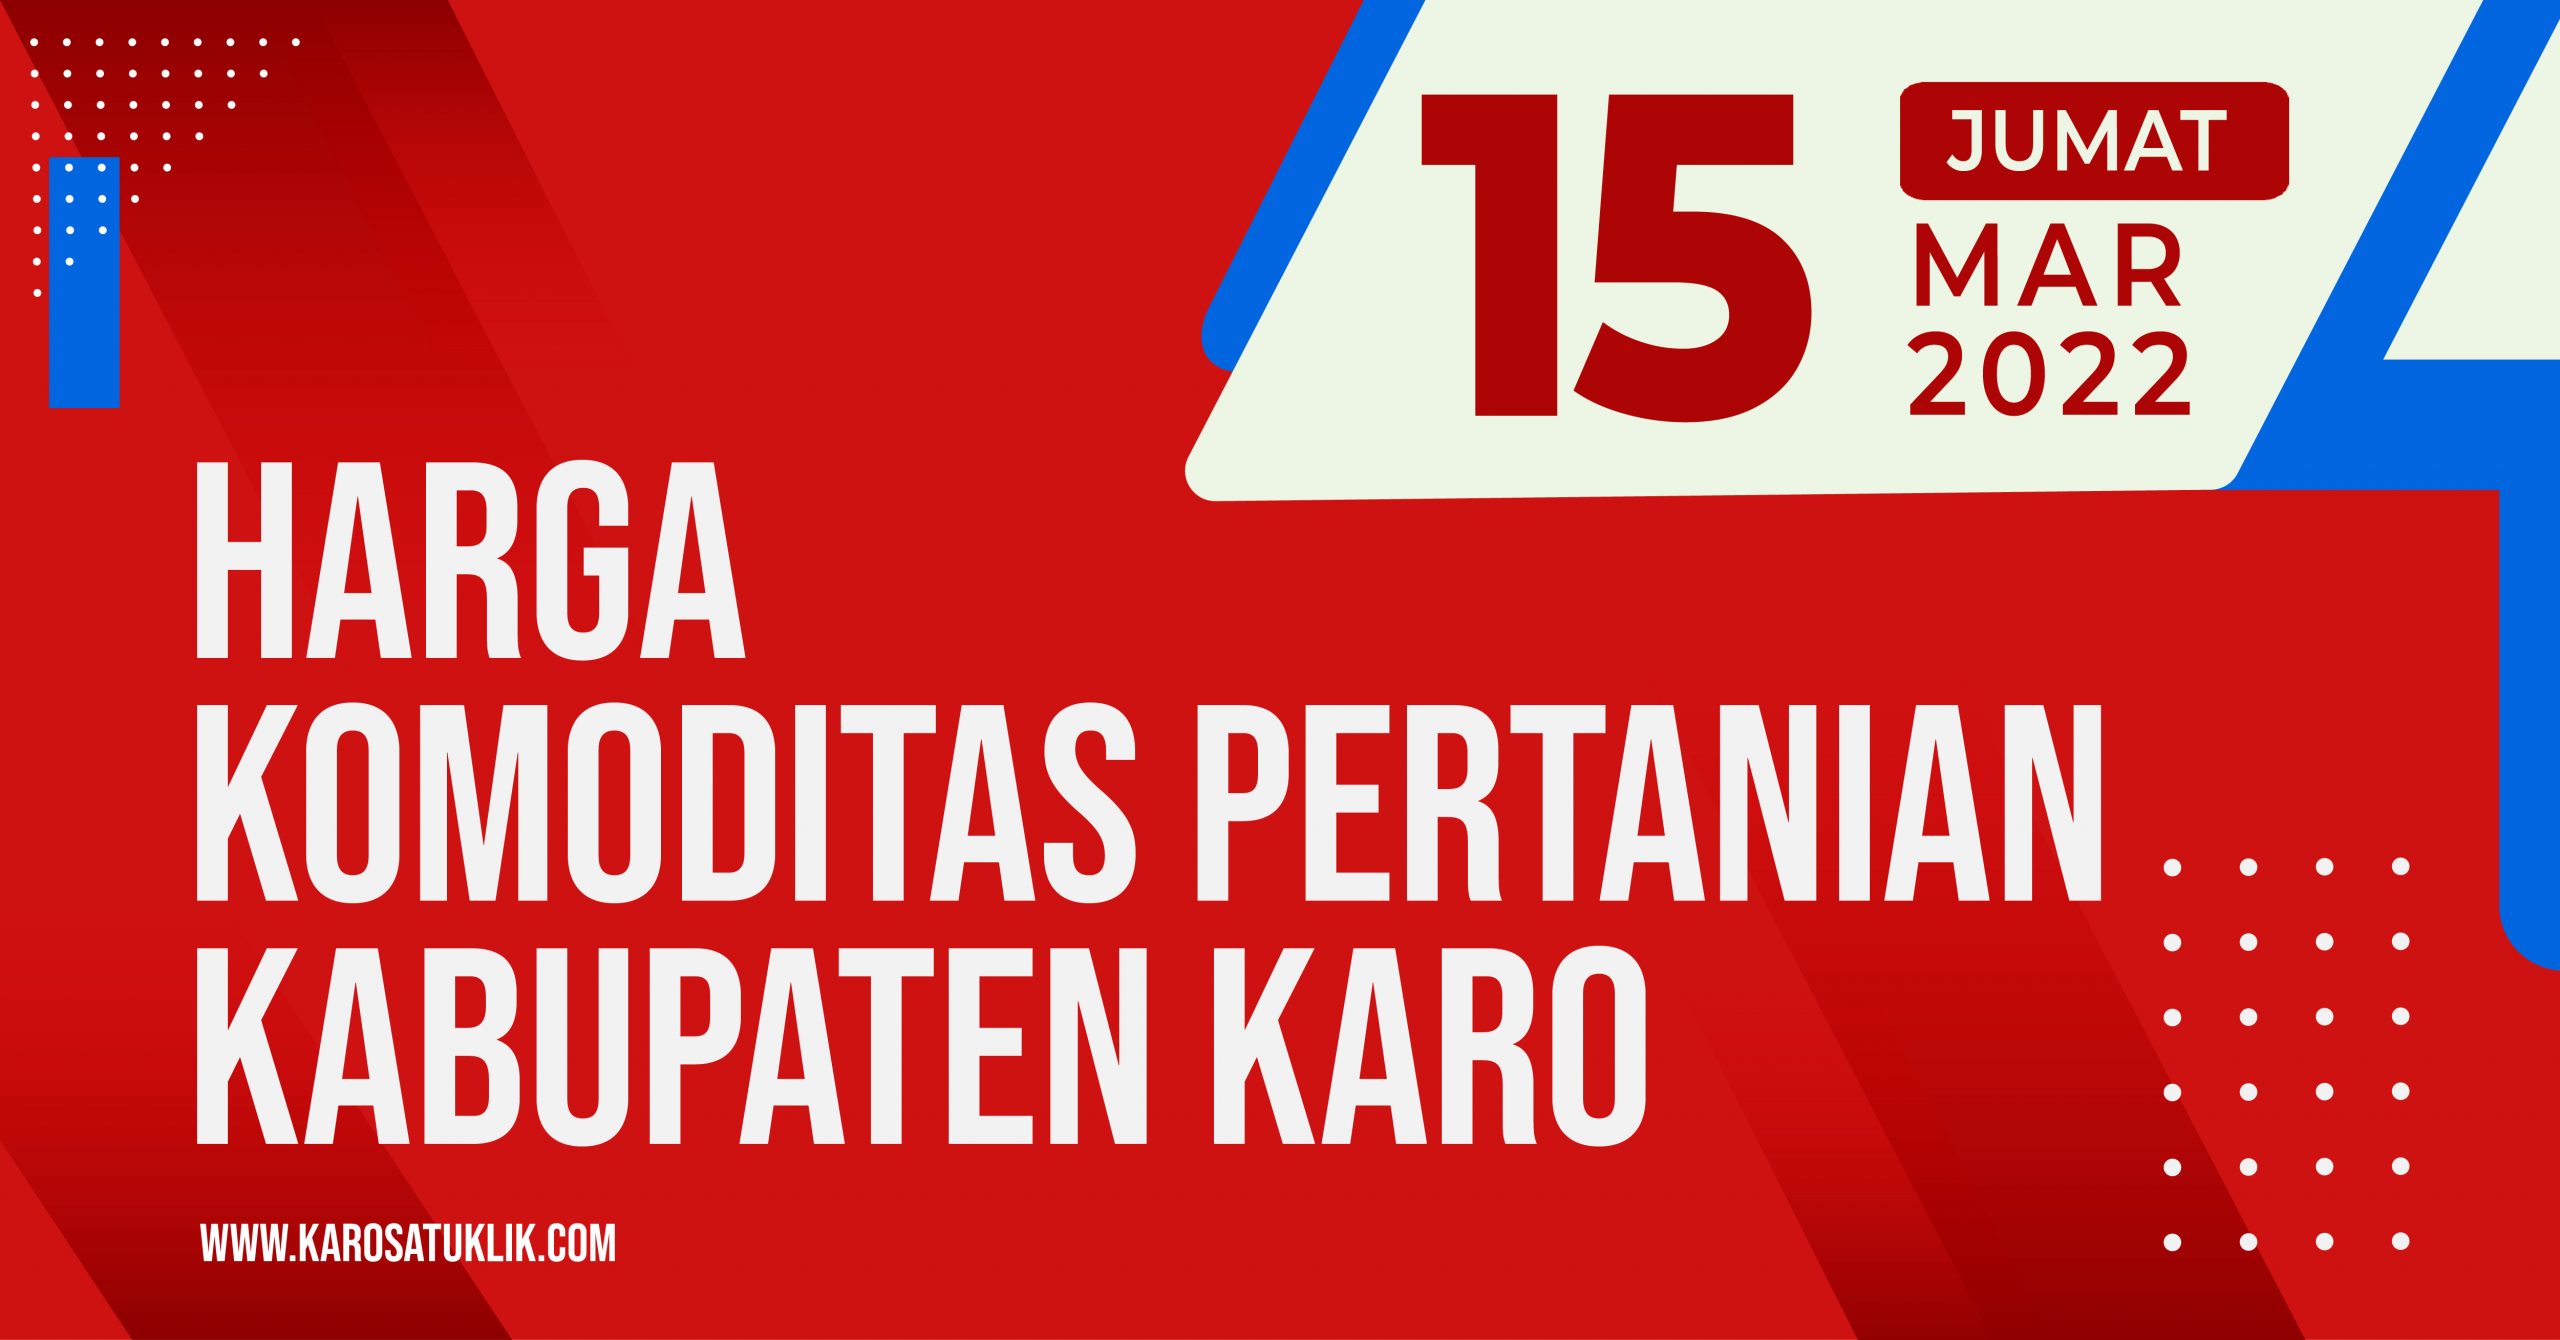 Daftar Harga Komoditas Pertanian Kabupaten Karo, Jumat 15 April 2022